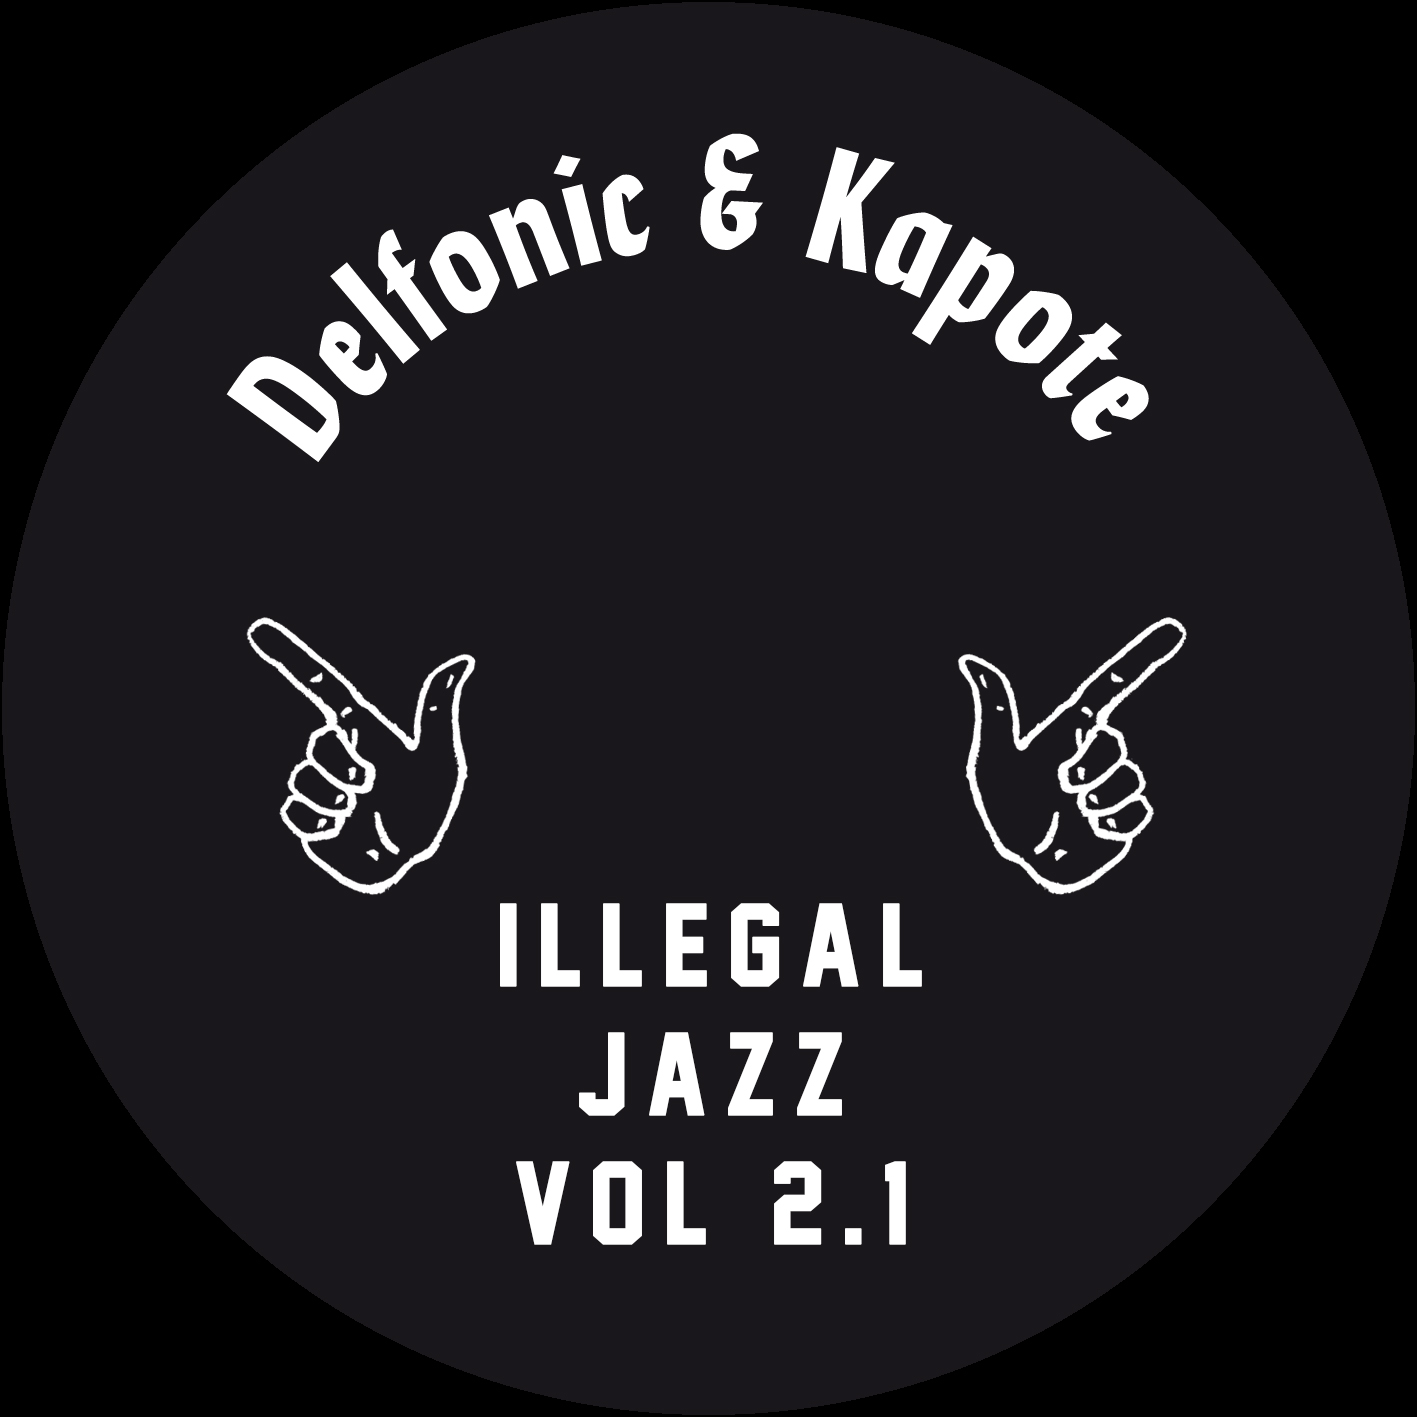 Delfonic & Kapote - Illegal Jazz Vol. 2.1 [IJR002.1]